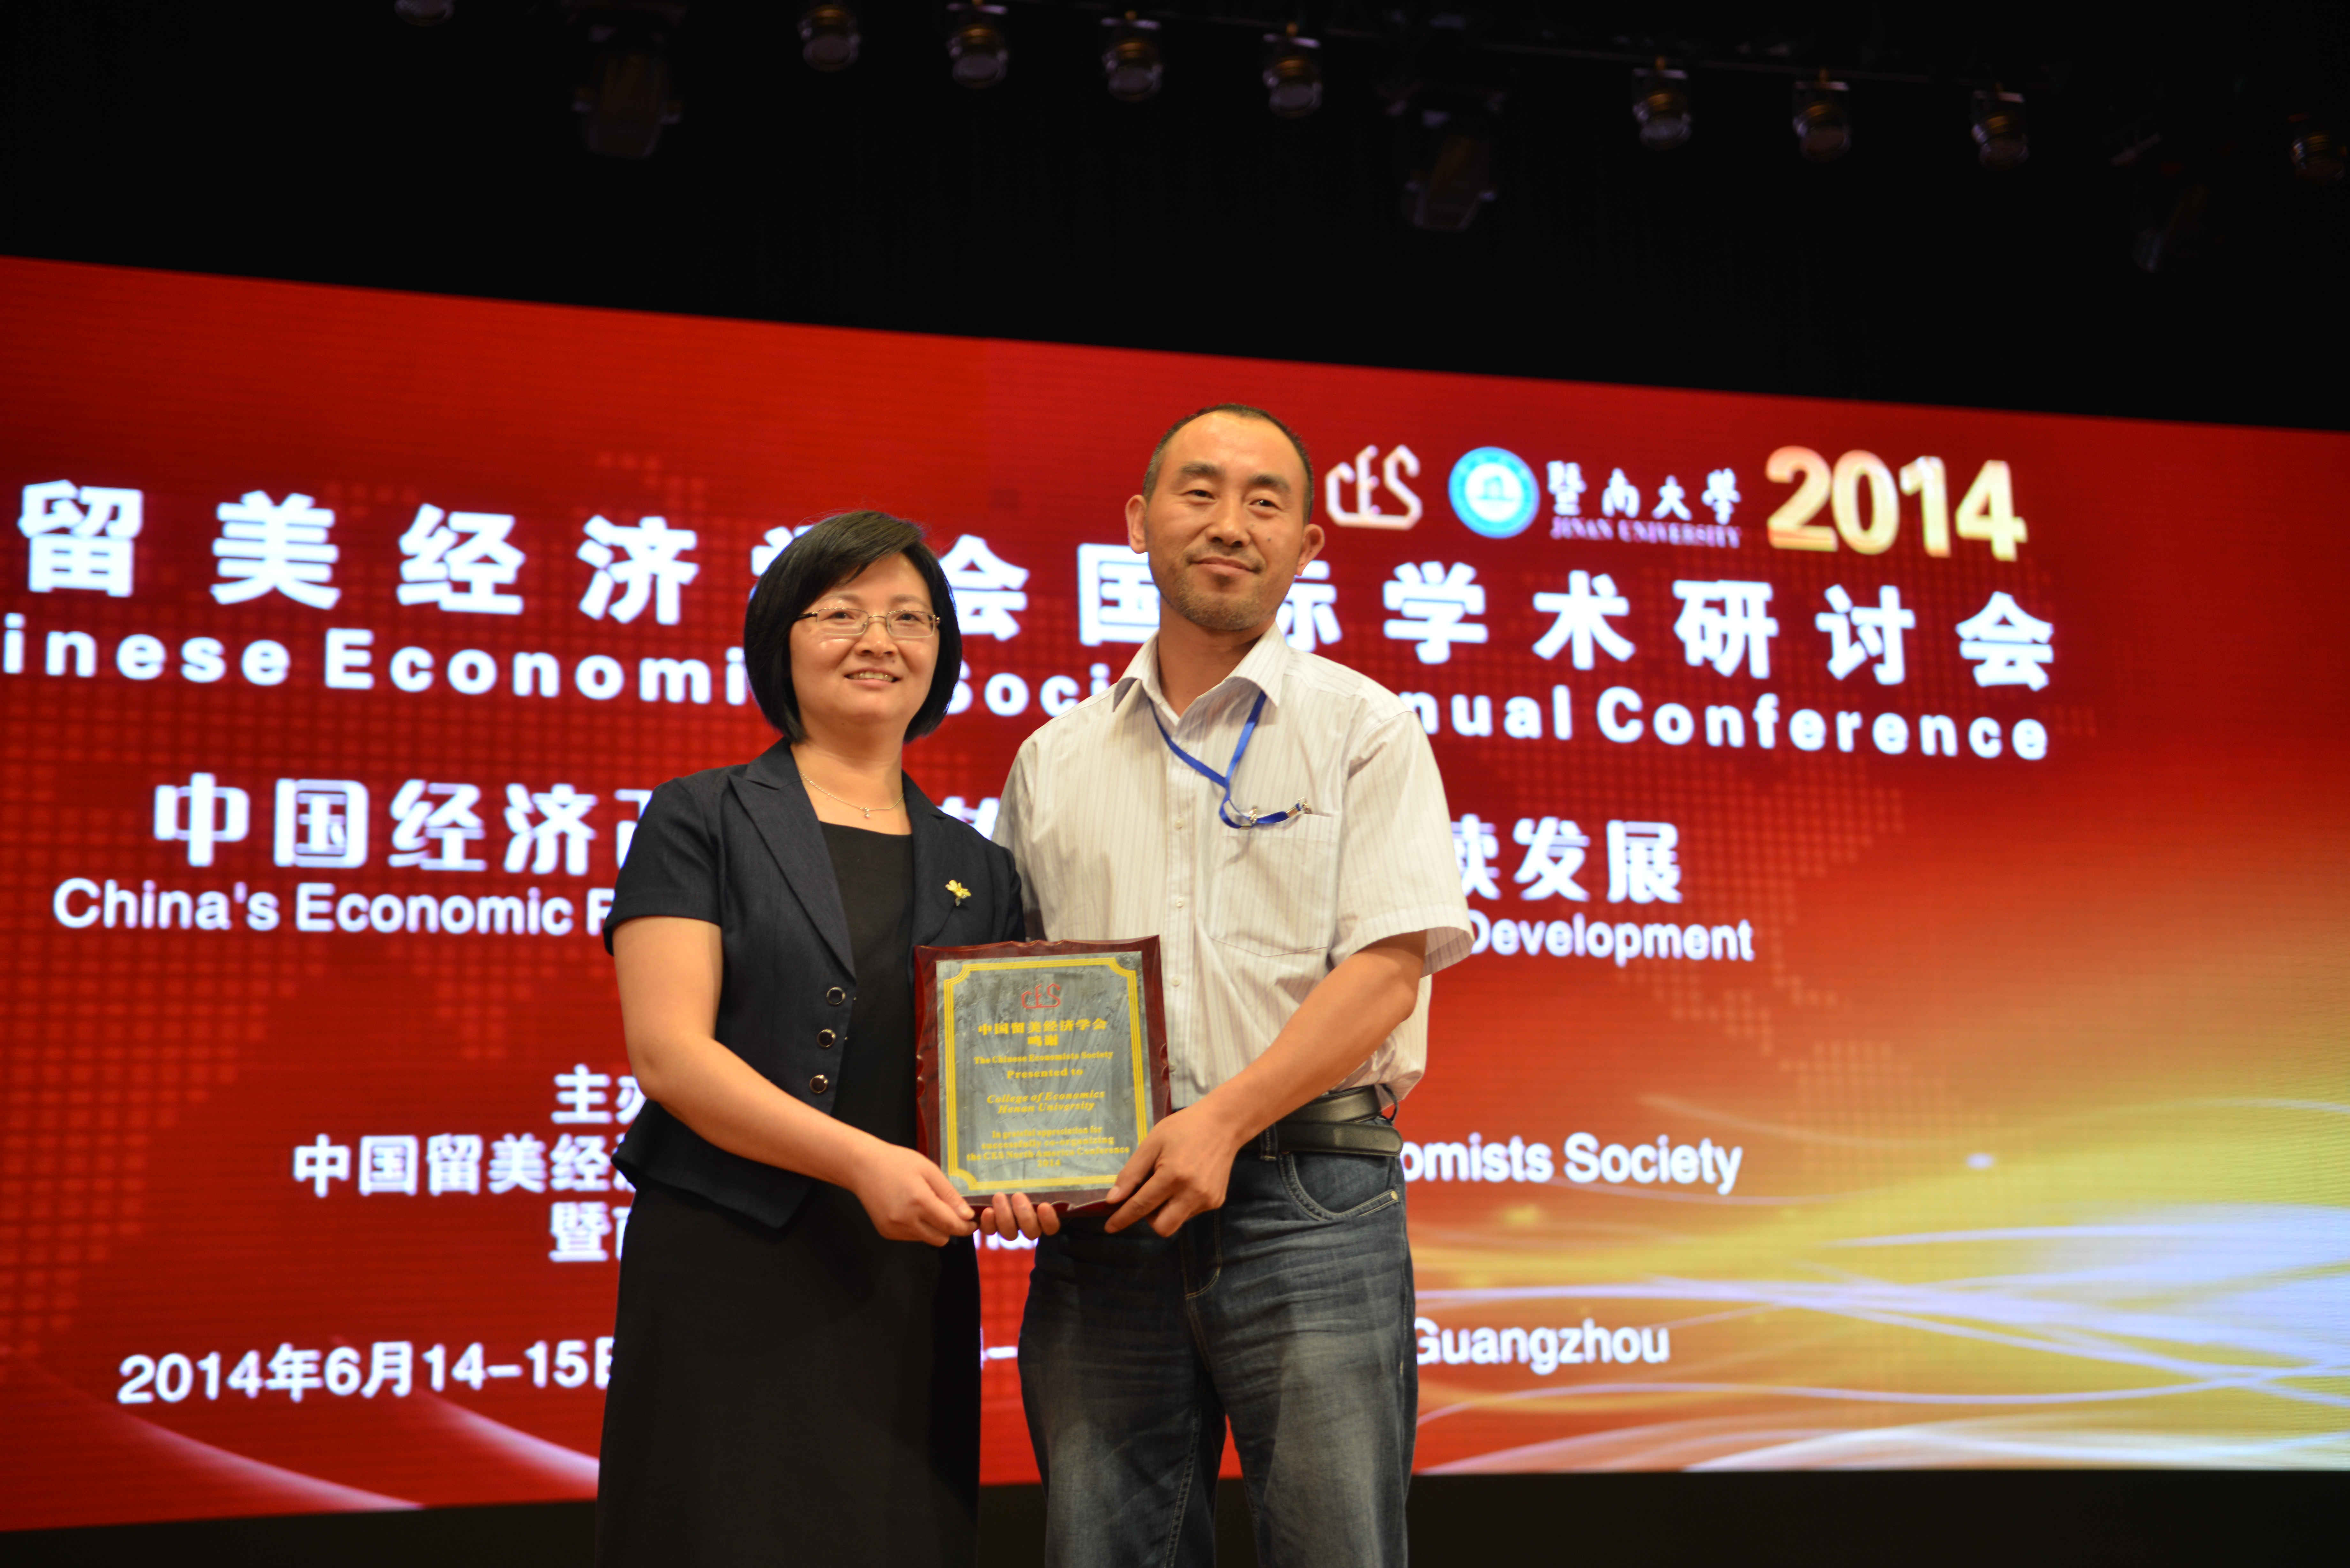 CES President presents appreciation award to Bingtao Song